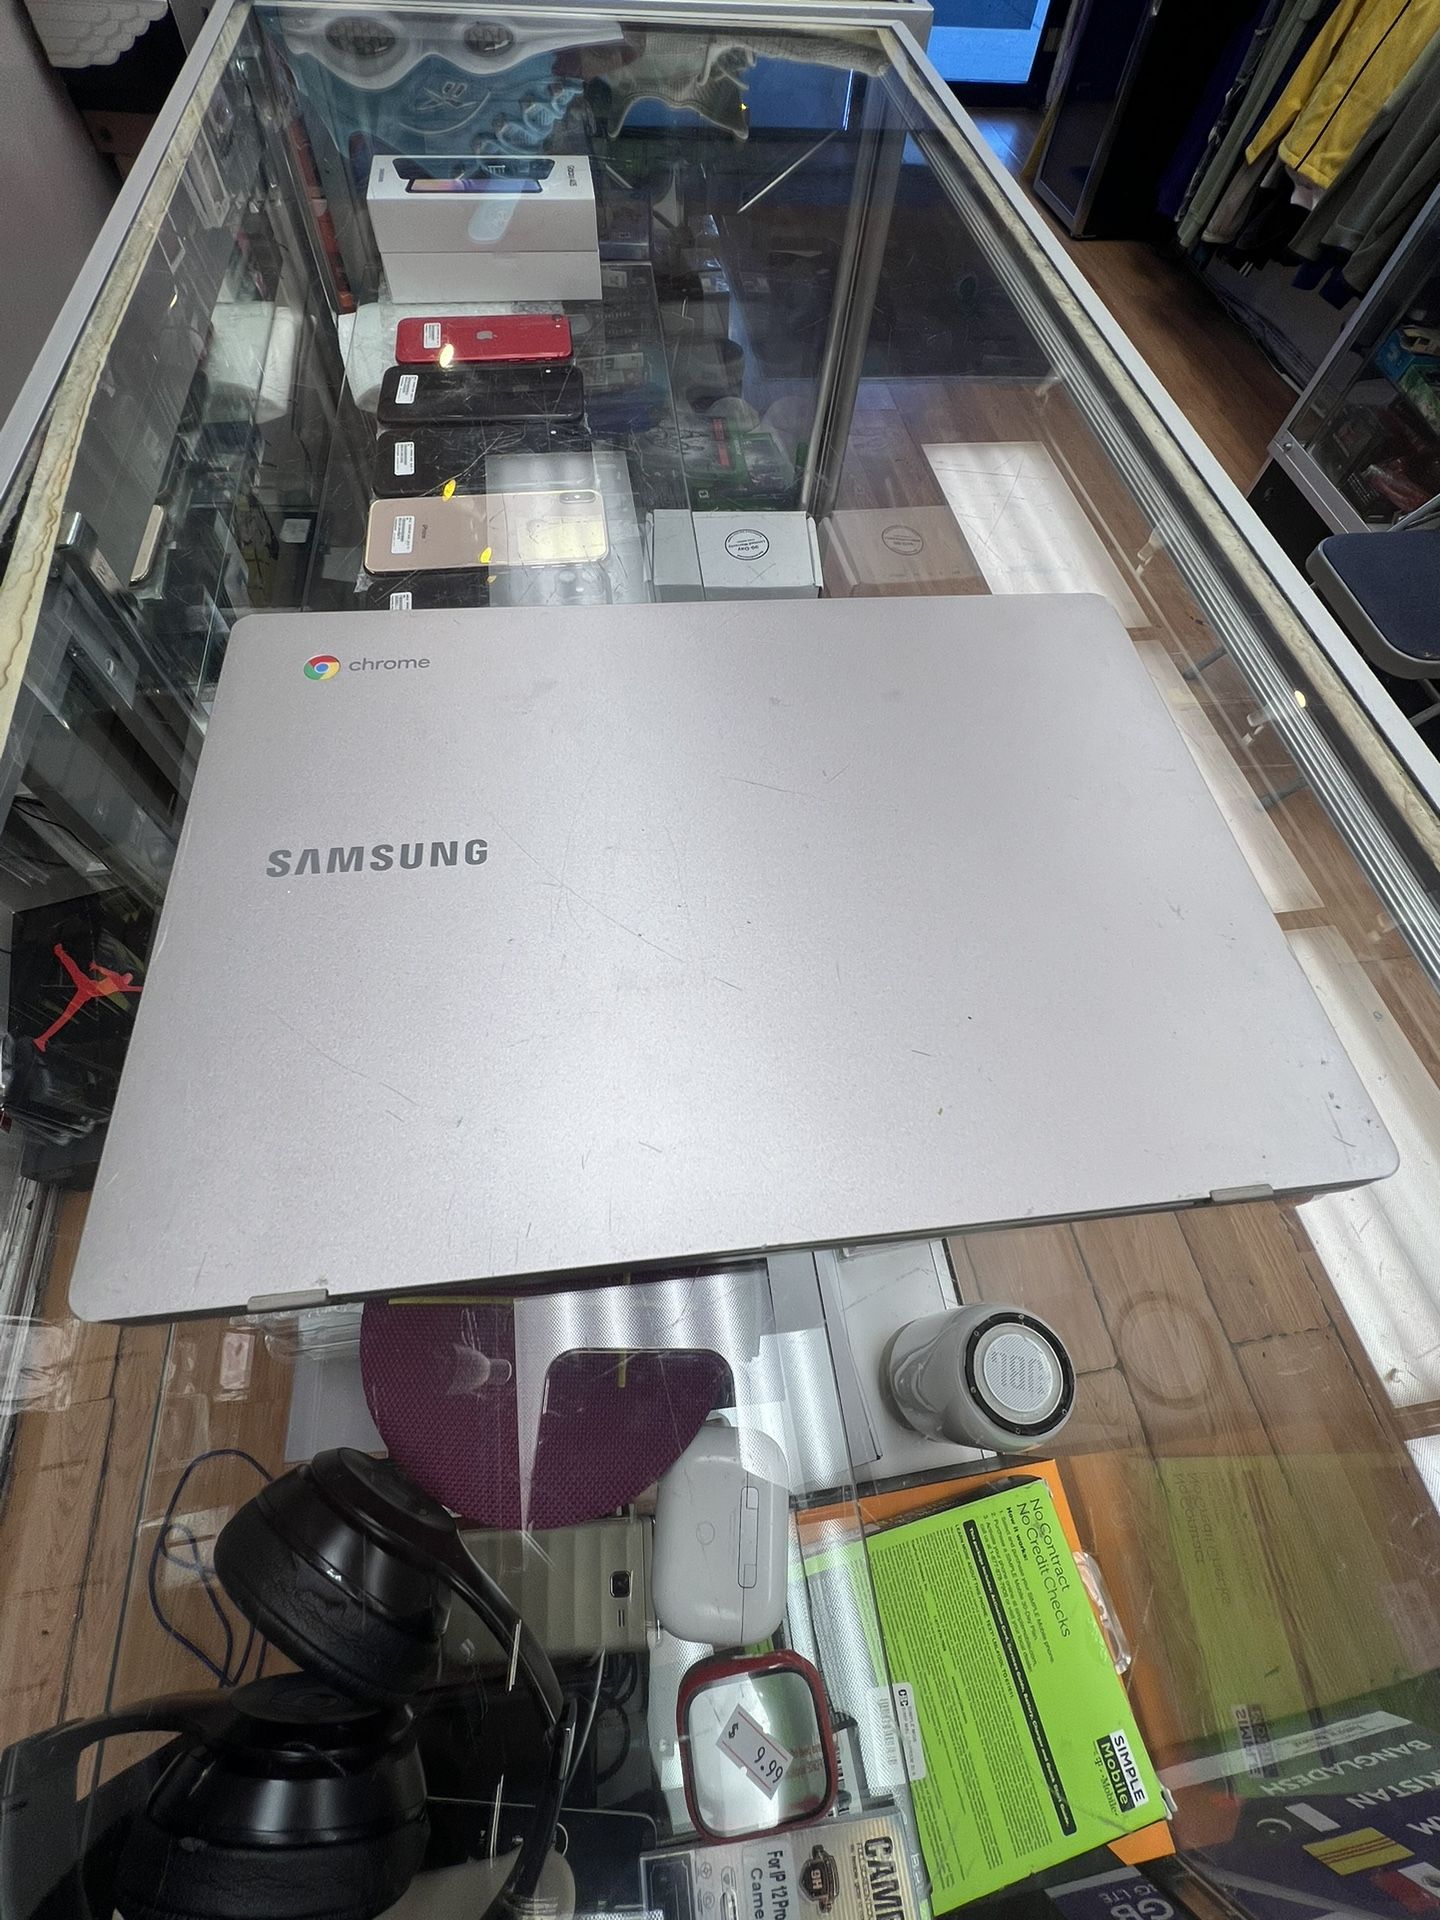 Samsung Chromebook Laptop 4 64gb Hardrive 4gb Ram Intel Celeron 